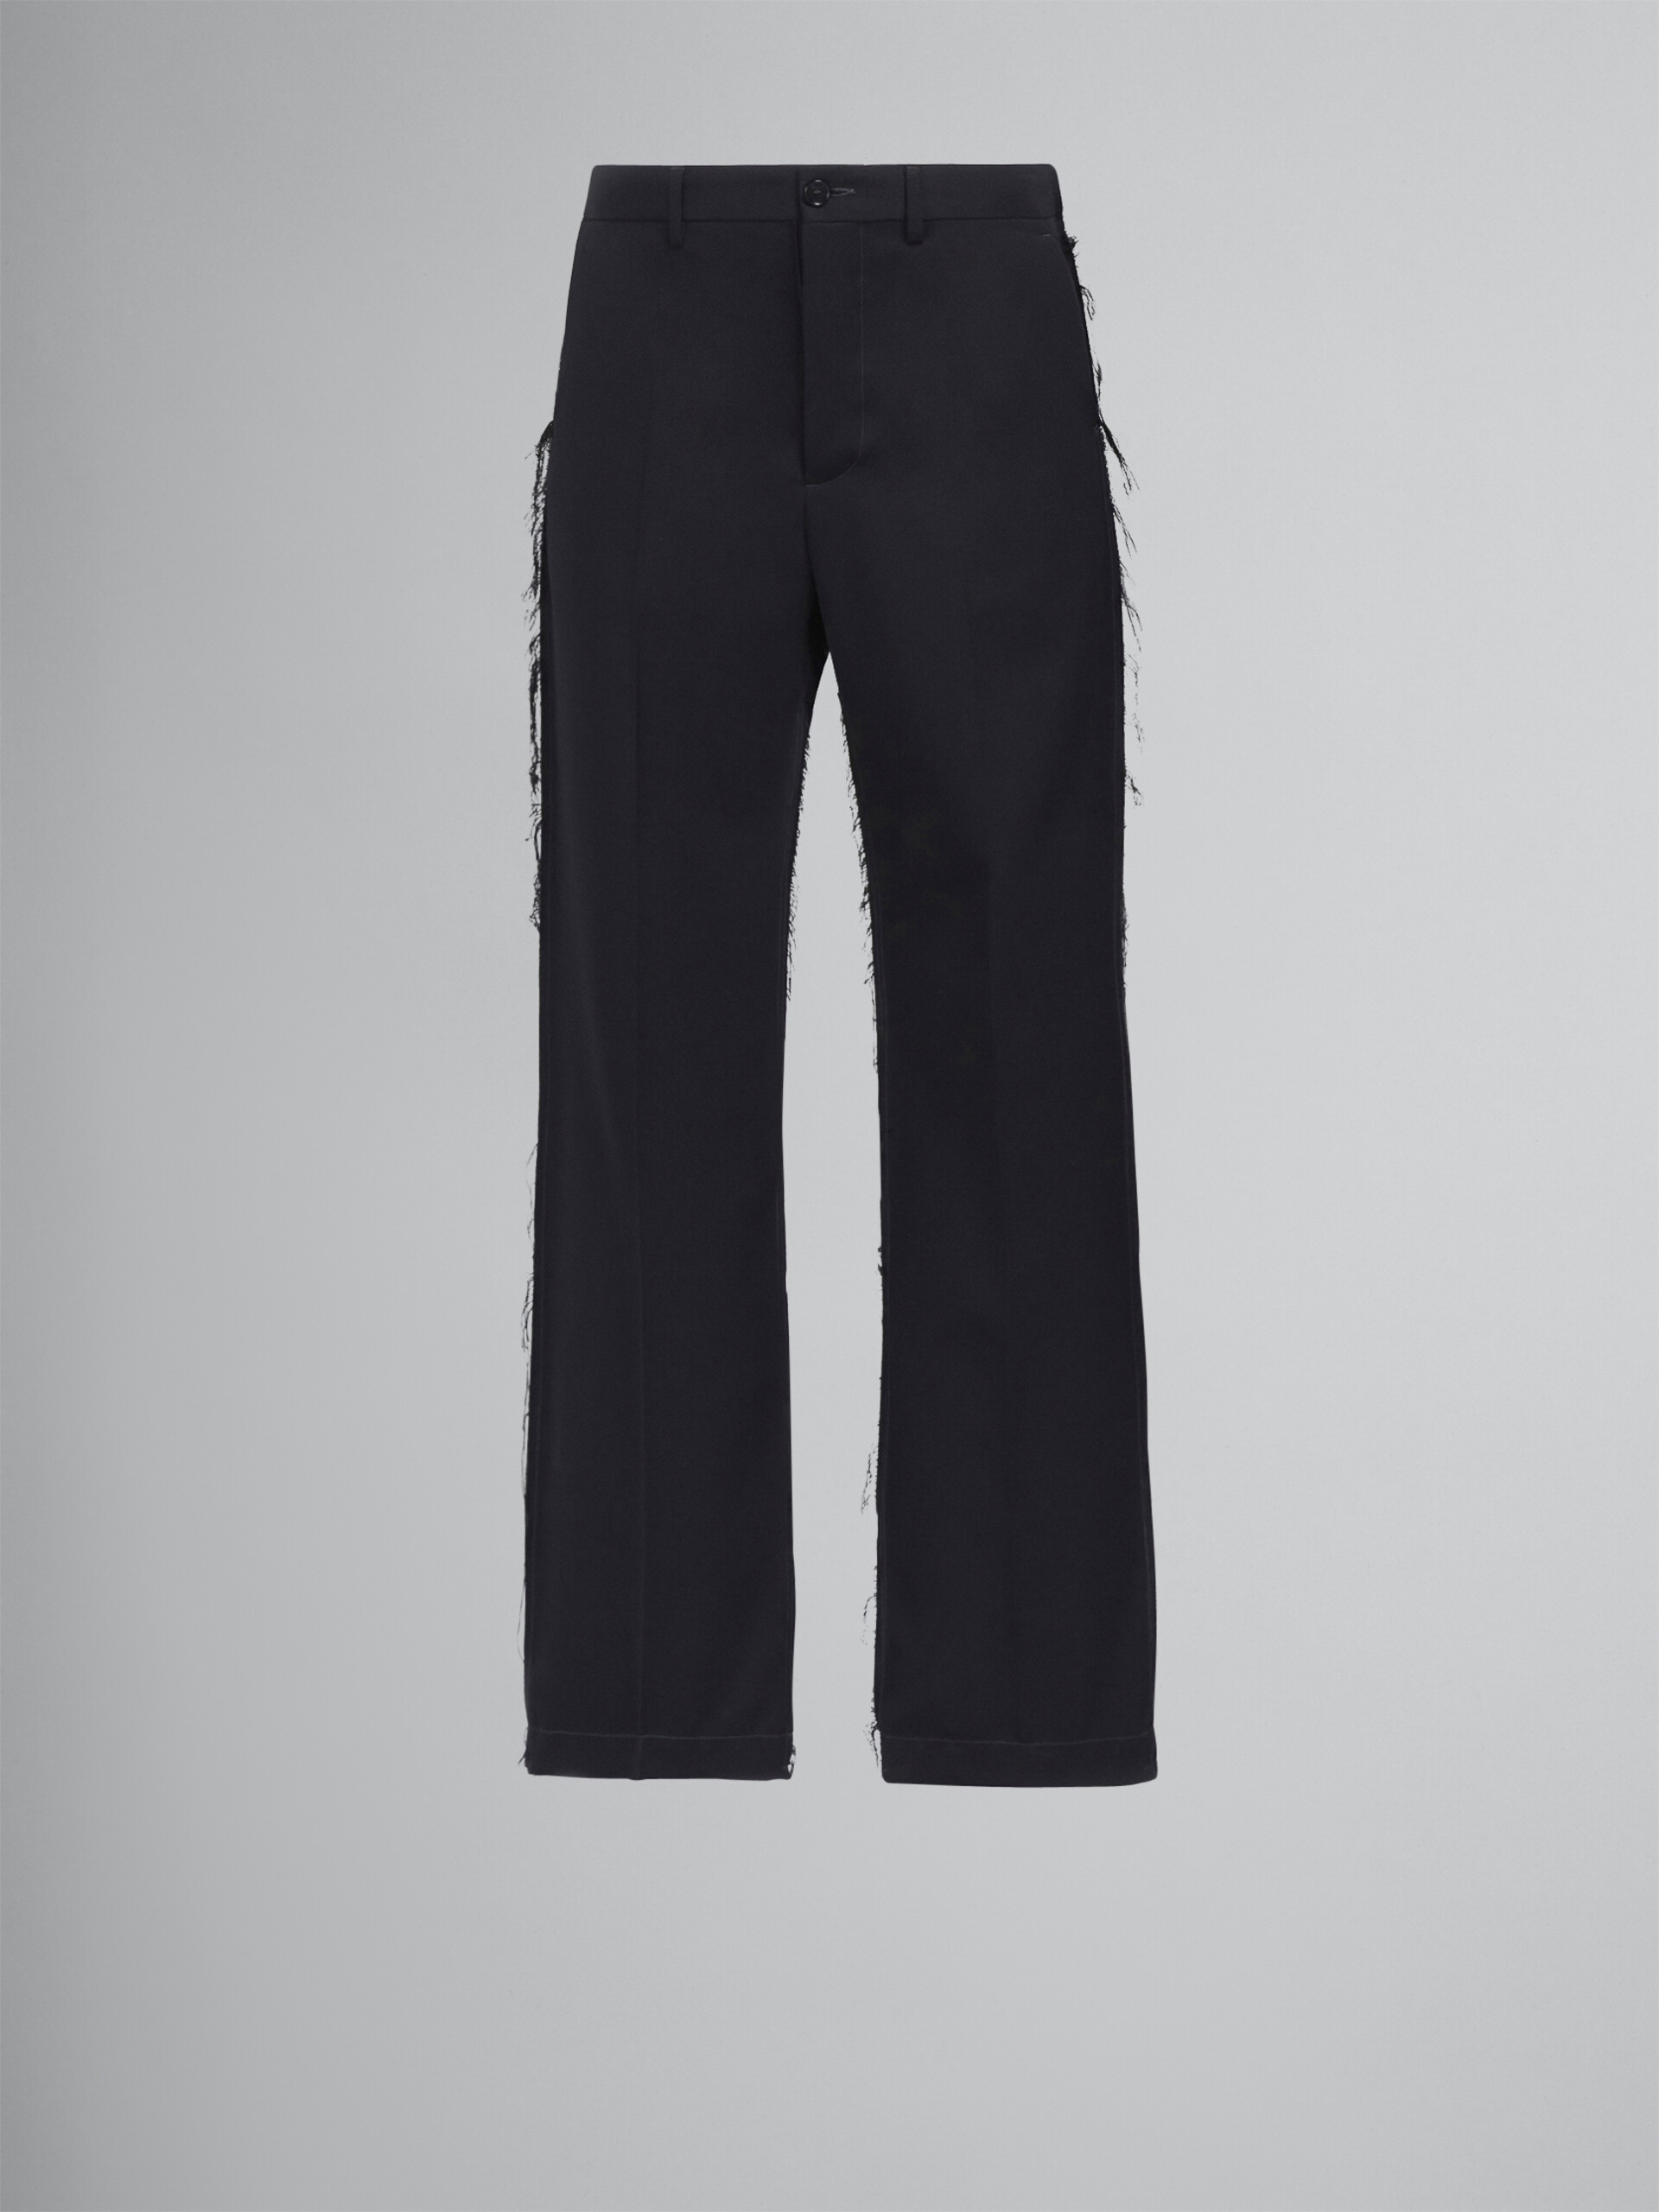 Pantaloni in gabardina di lana neri - Pantaloni - Image 1